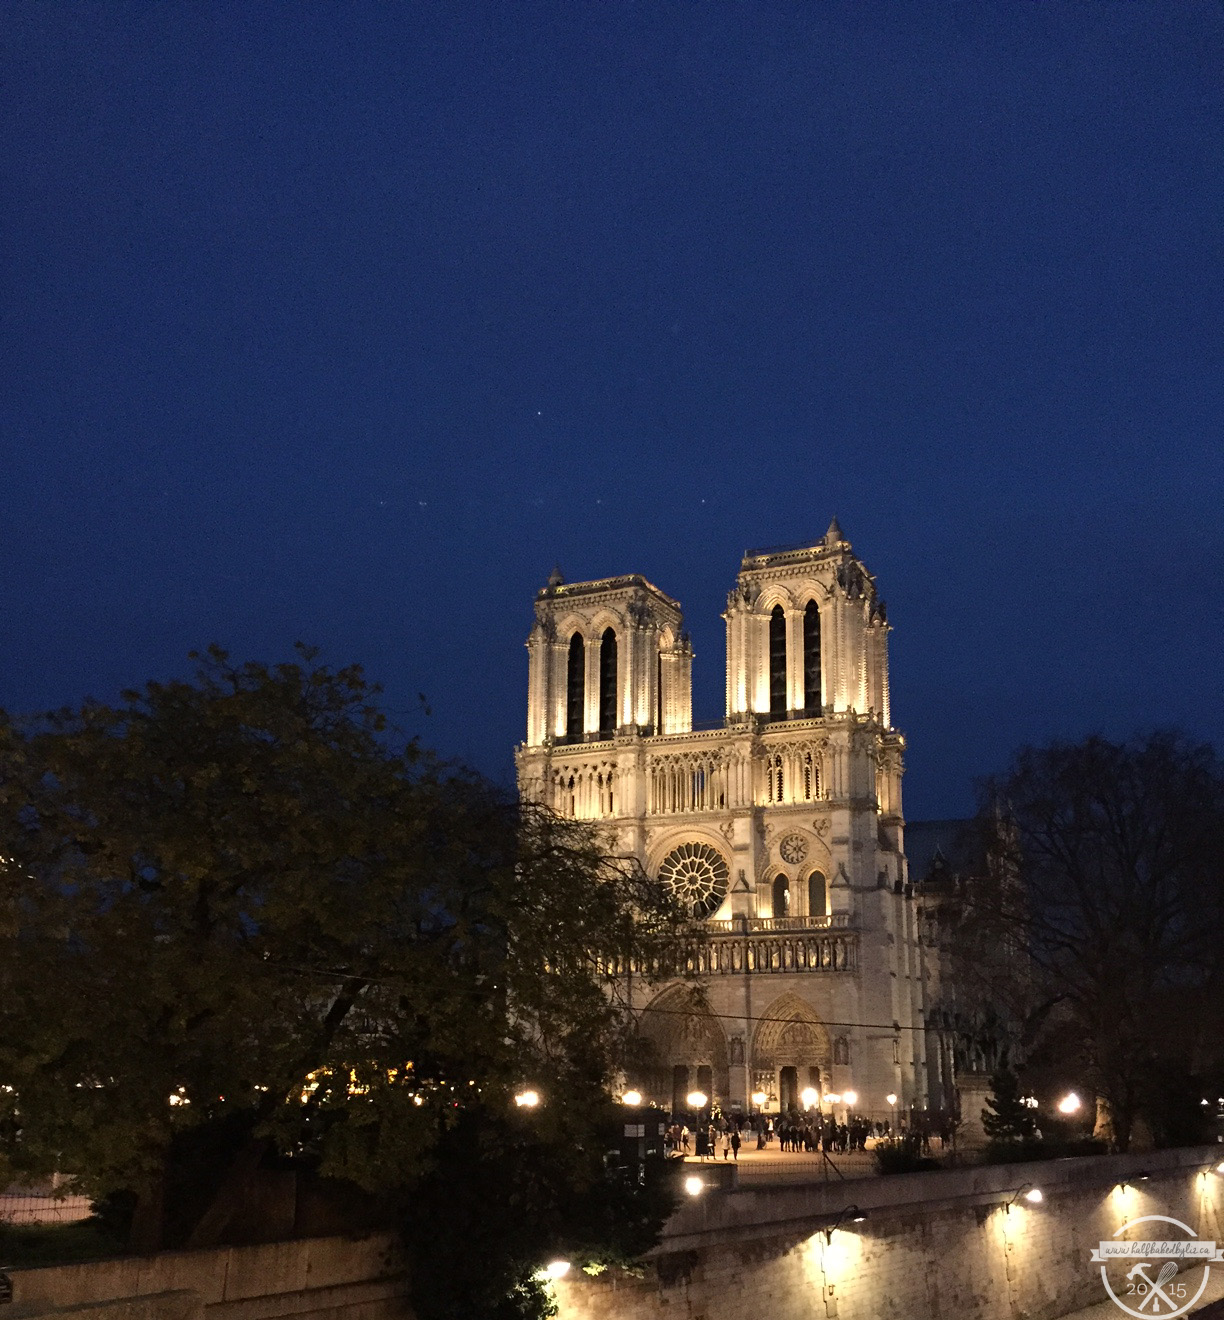 30 - Notre Dame